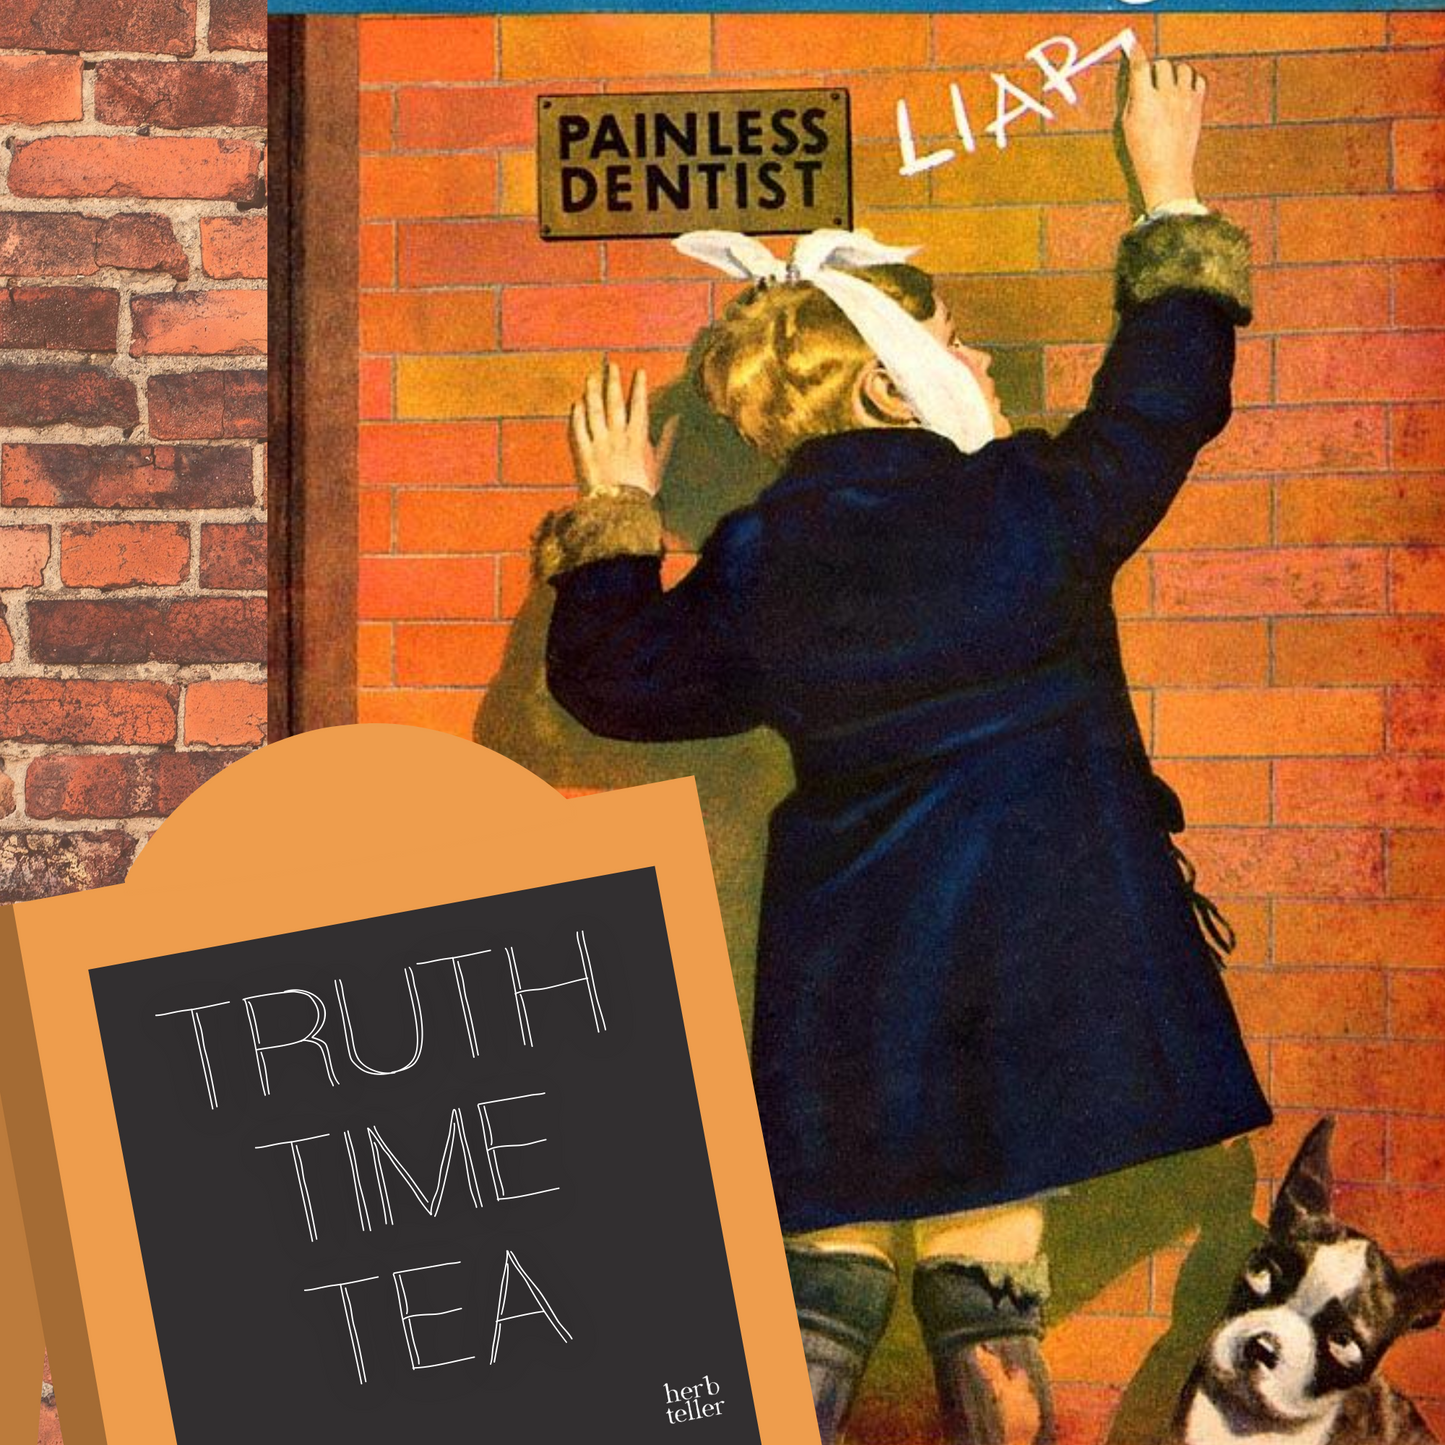 Truth Time Herbal Tea - Original City Apothecary